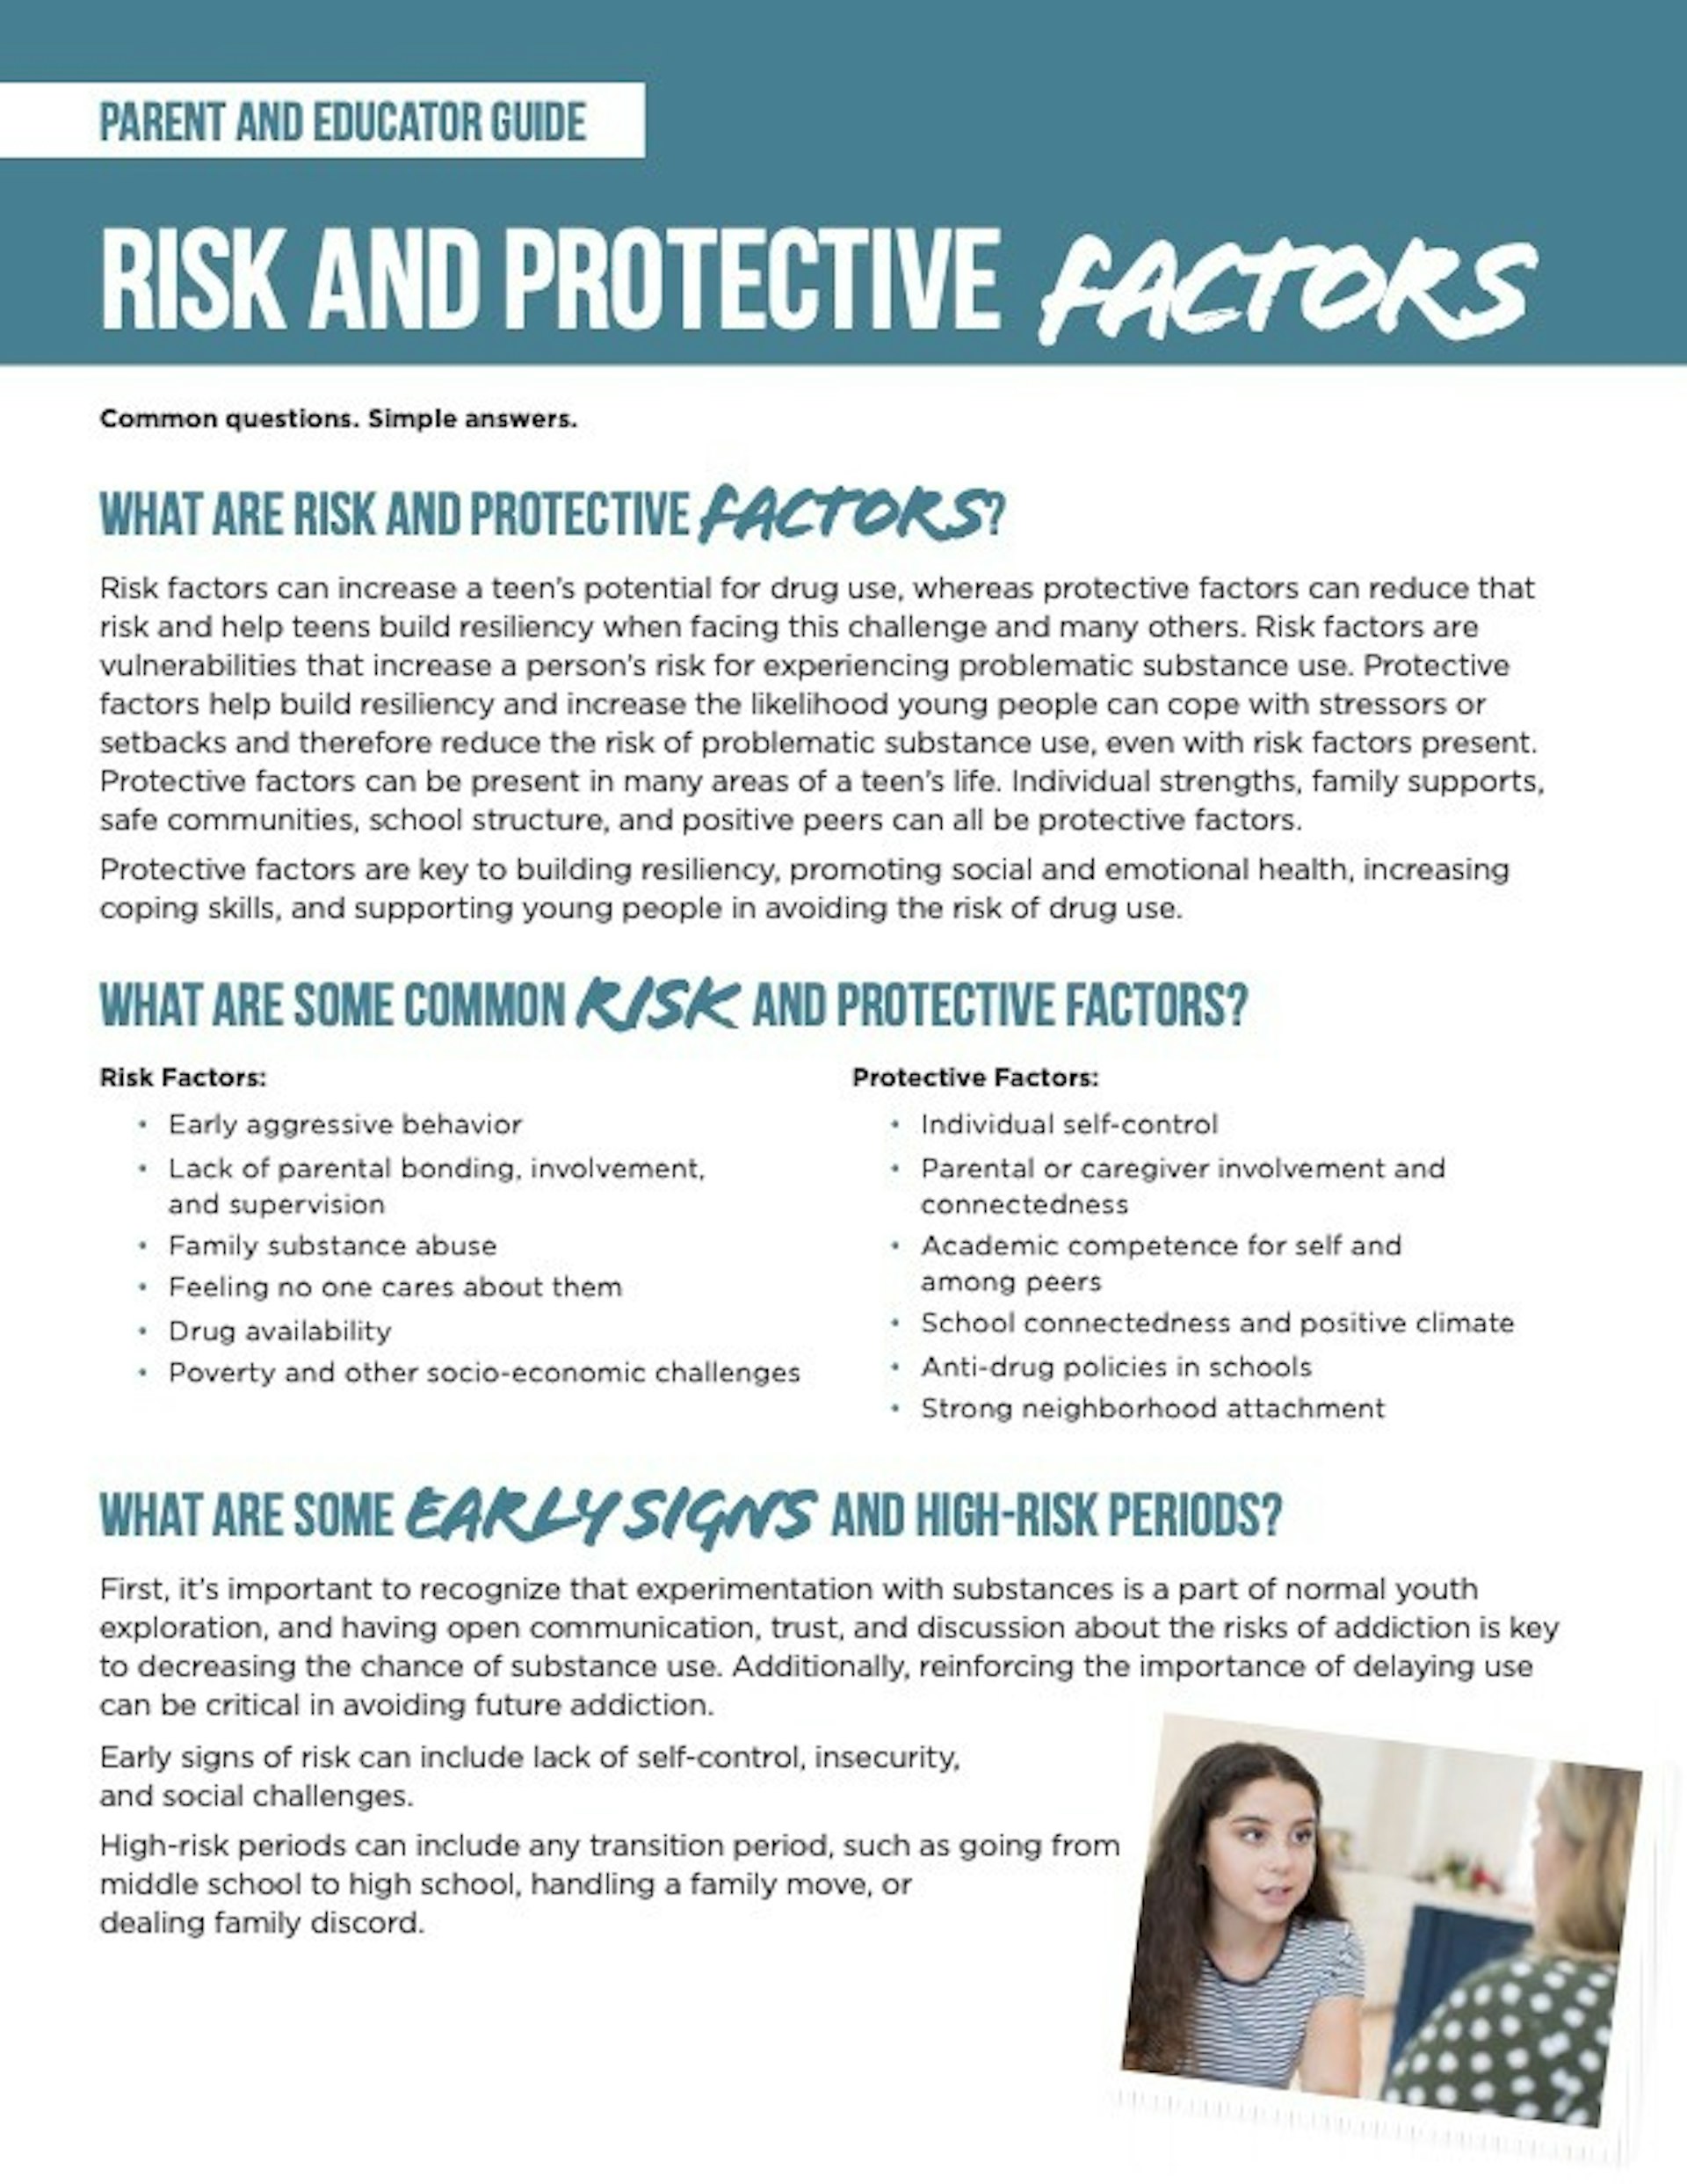 Protective factors